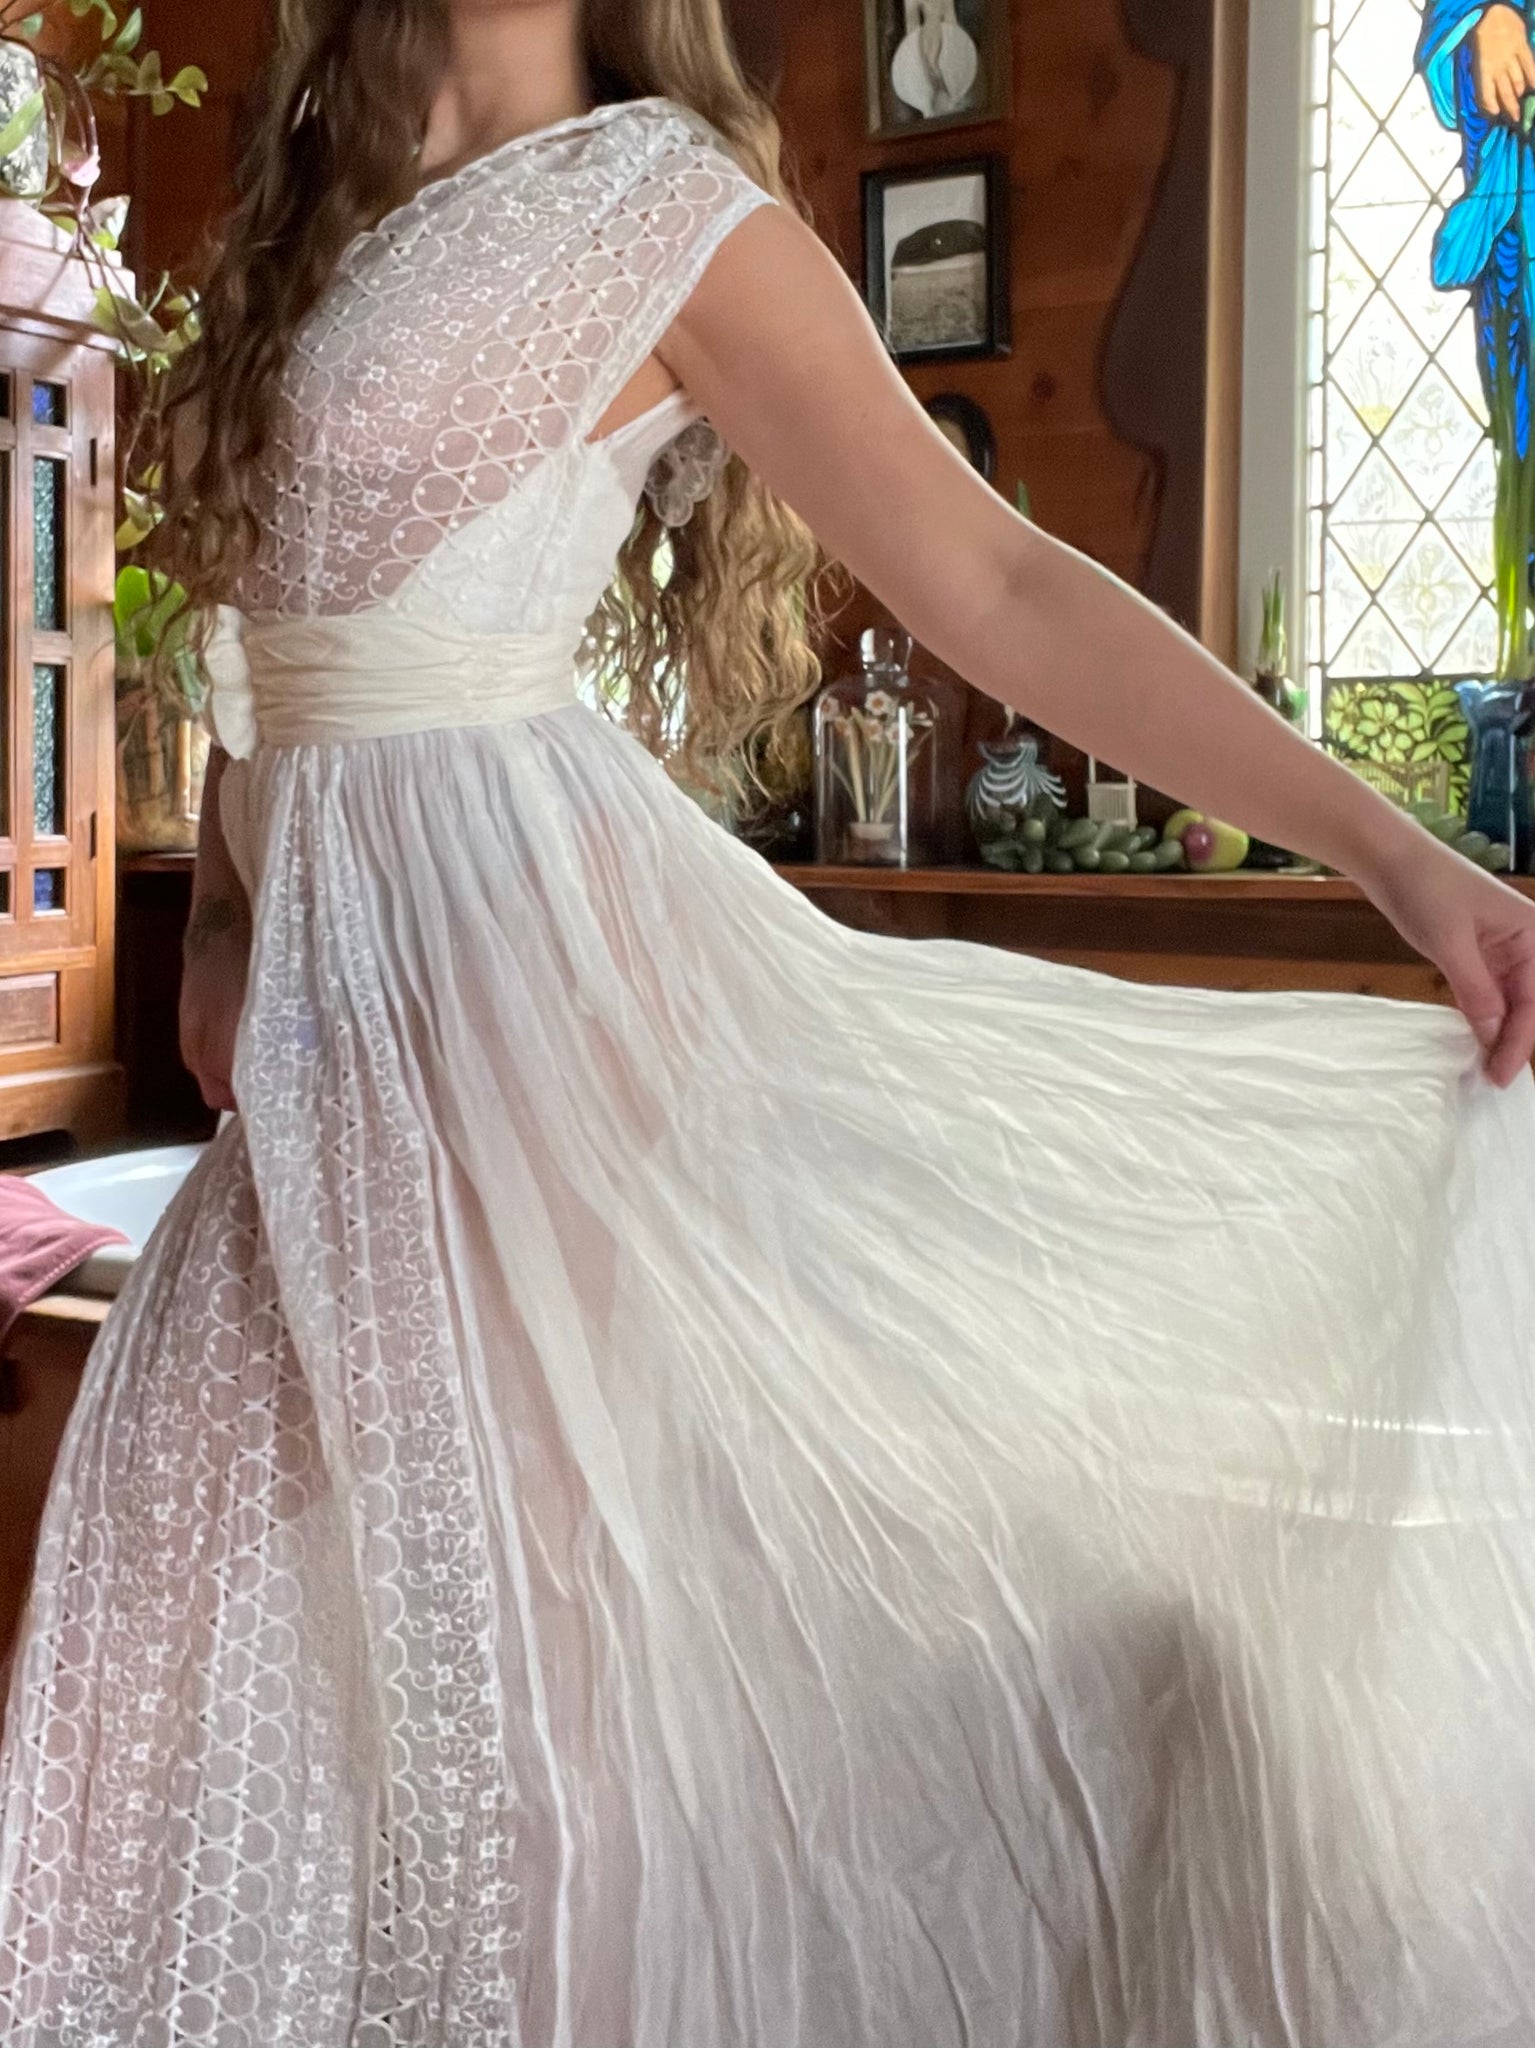 Hope and Harlequin - UK Vintage Clothing & Wedding Dress Specialists